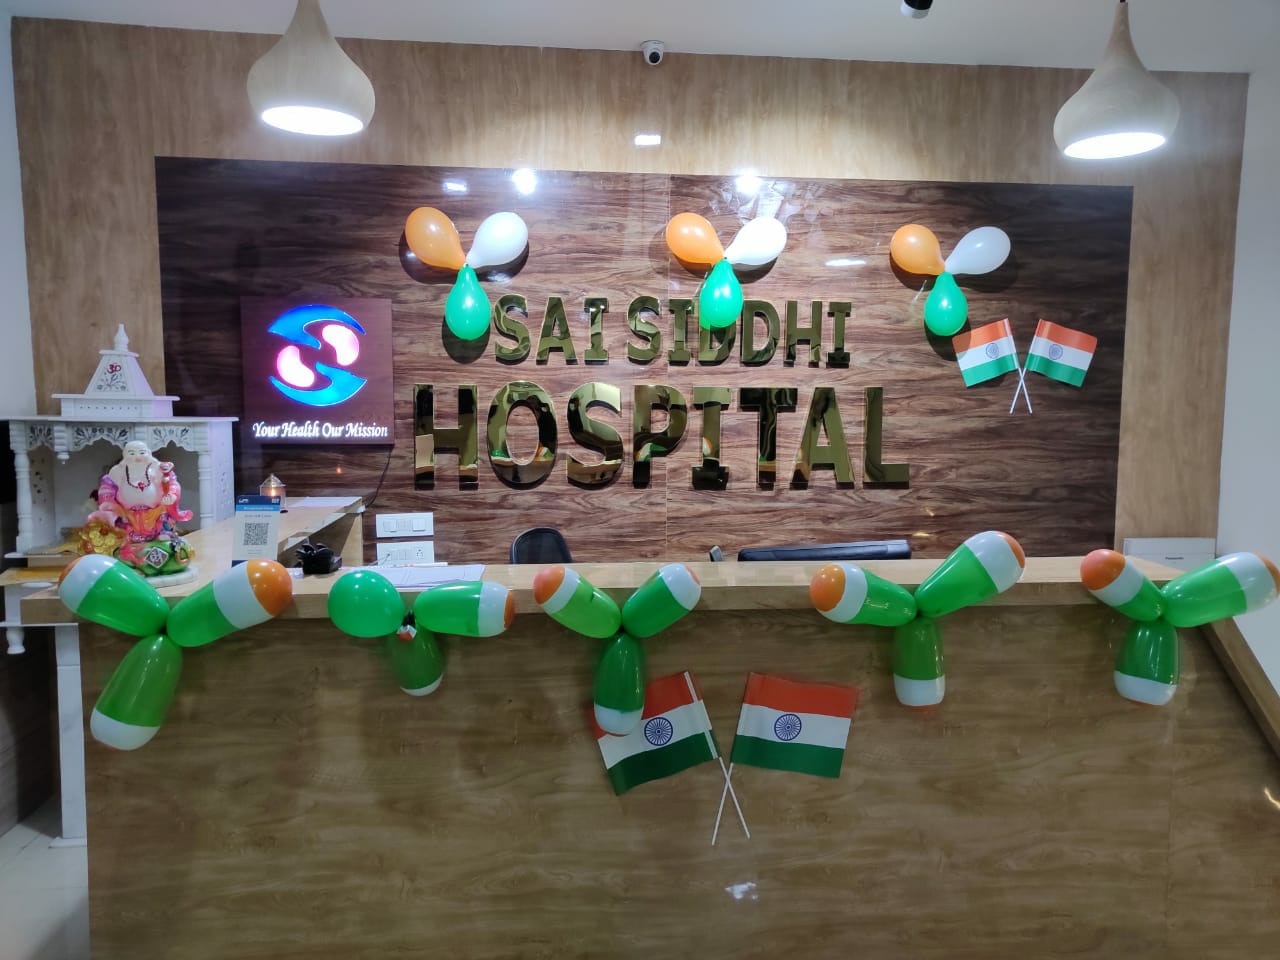 Sai siddhi hospital decoration